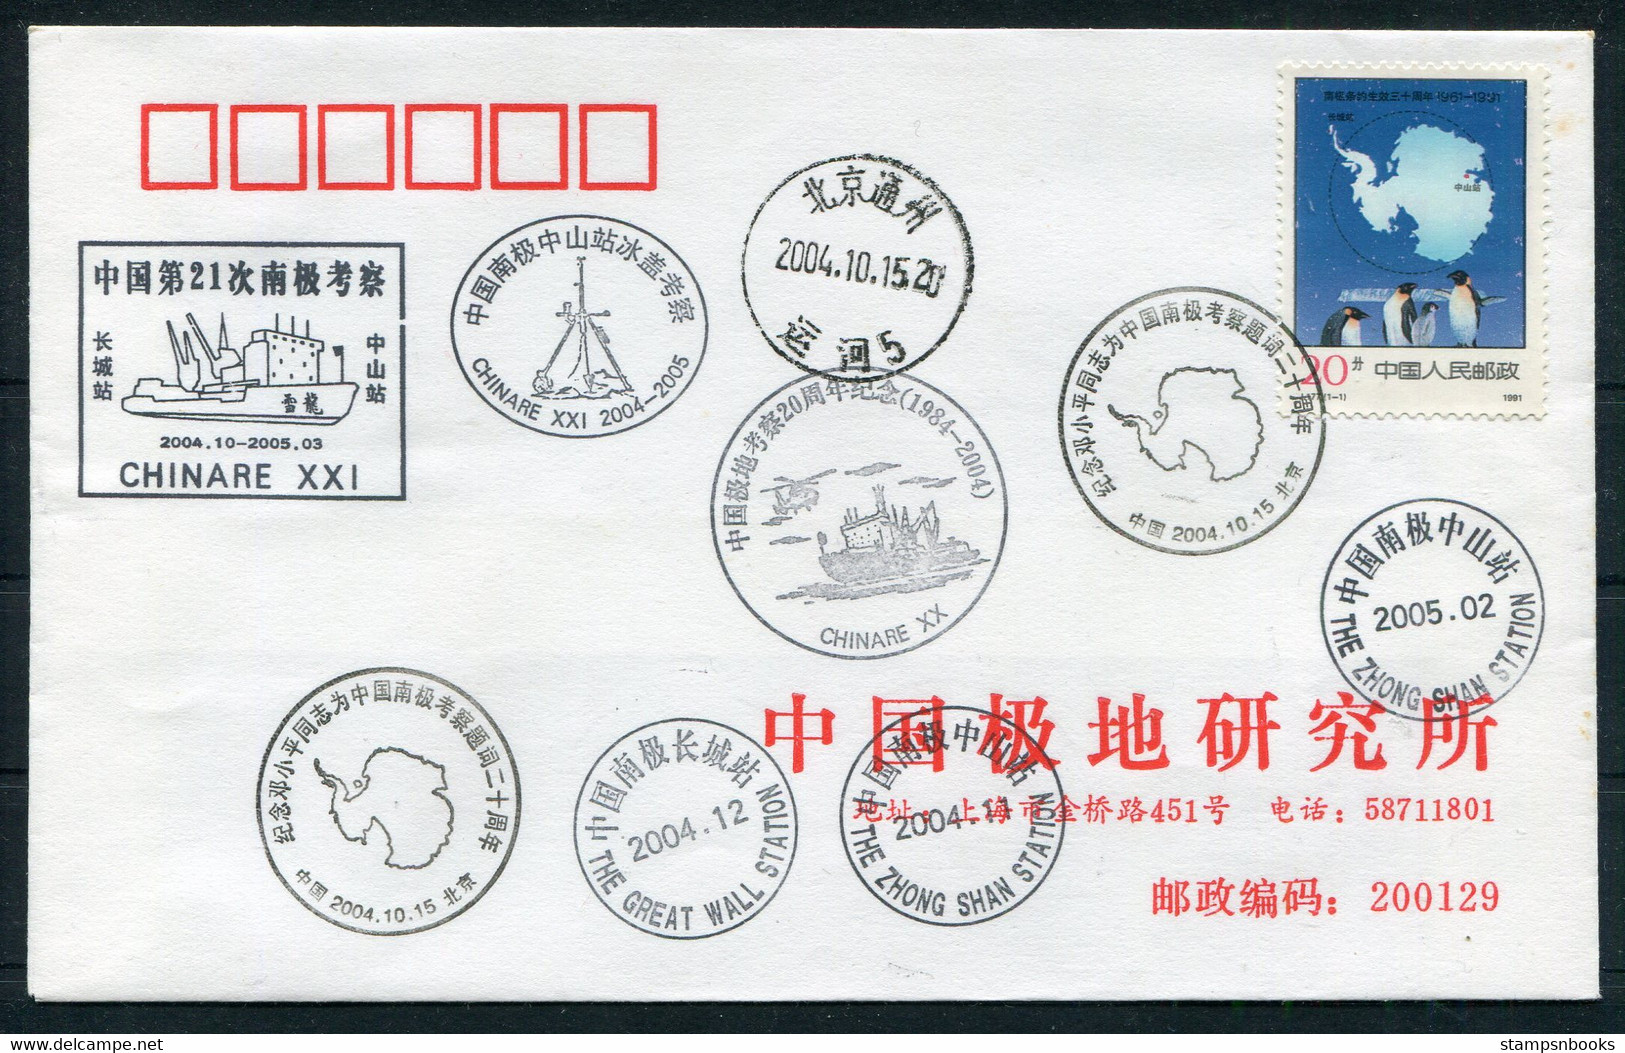 2004-5 China Antarctica CHINARE 21 Expedition, Great Wall Station + Zhong Shan Station, Penguin Cover - Briefe U. Dokumente